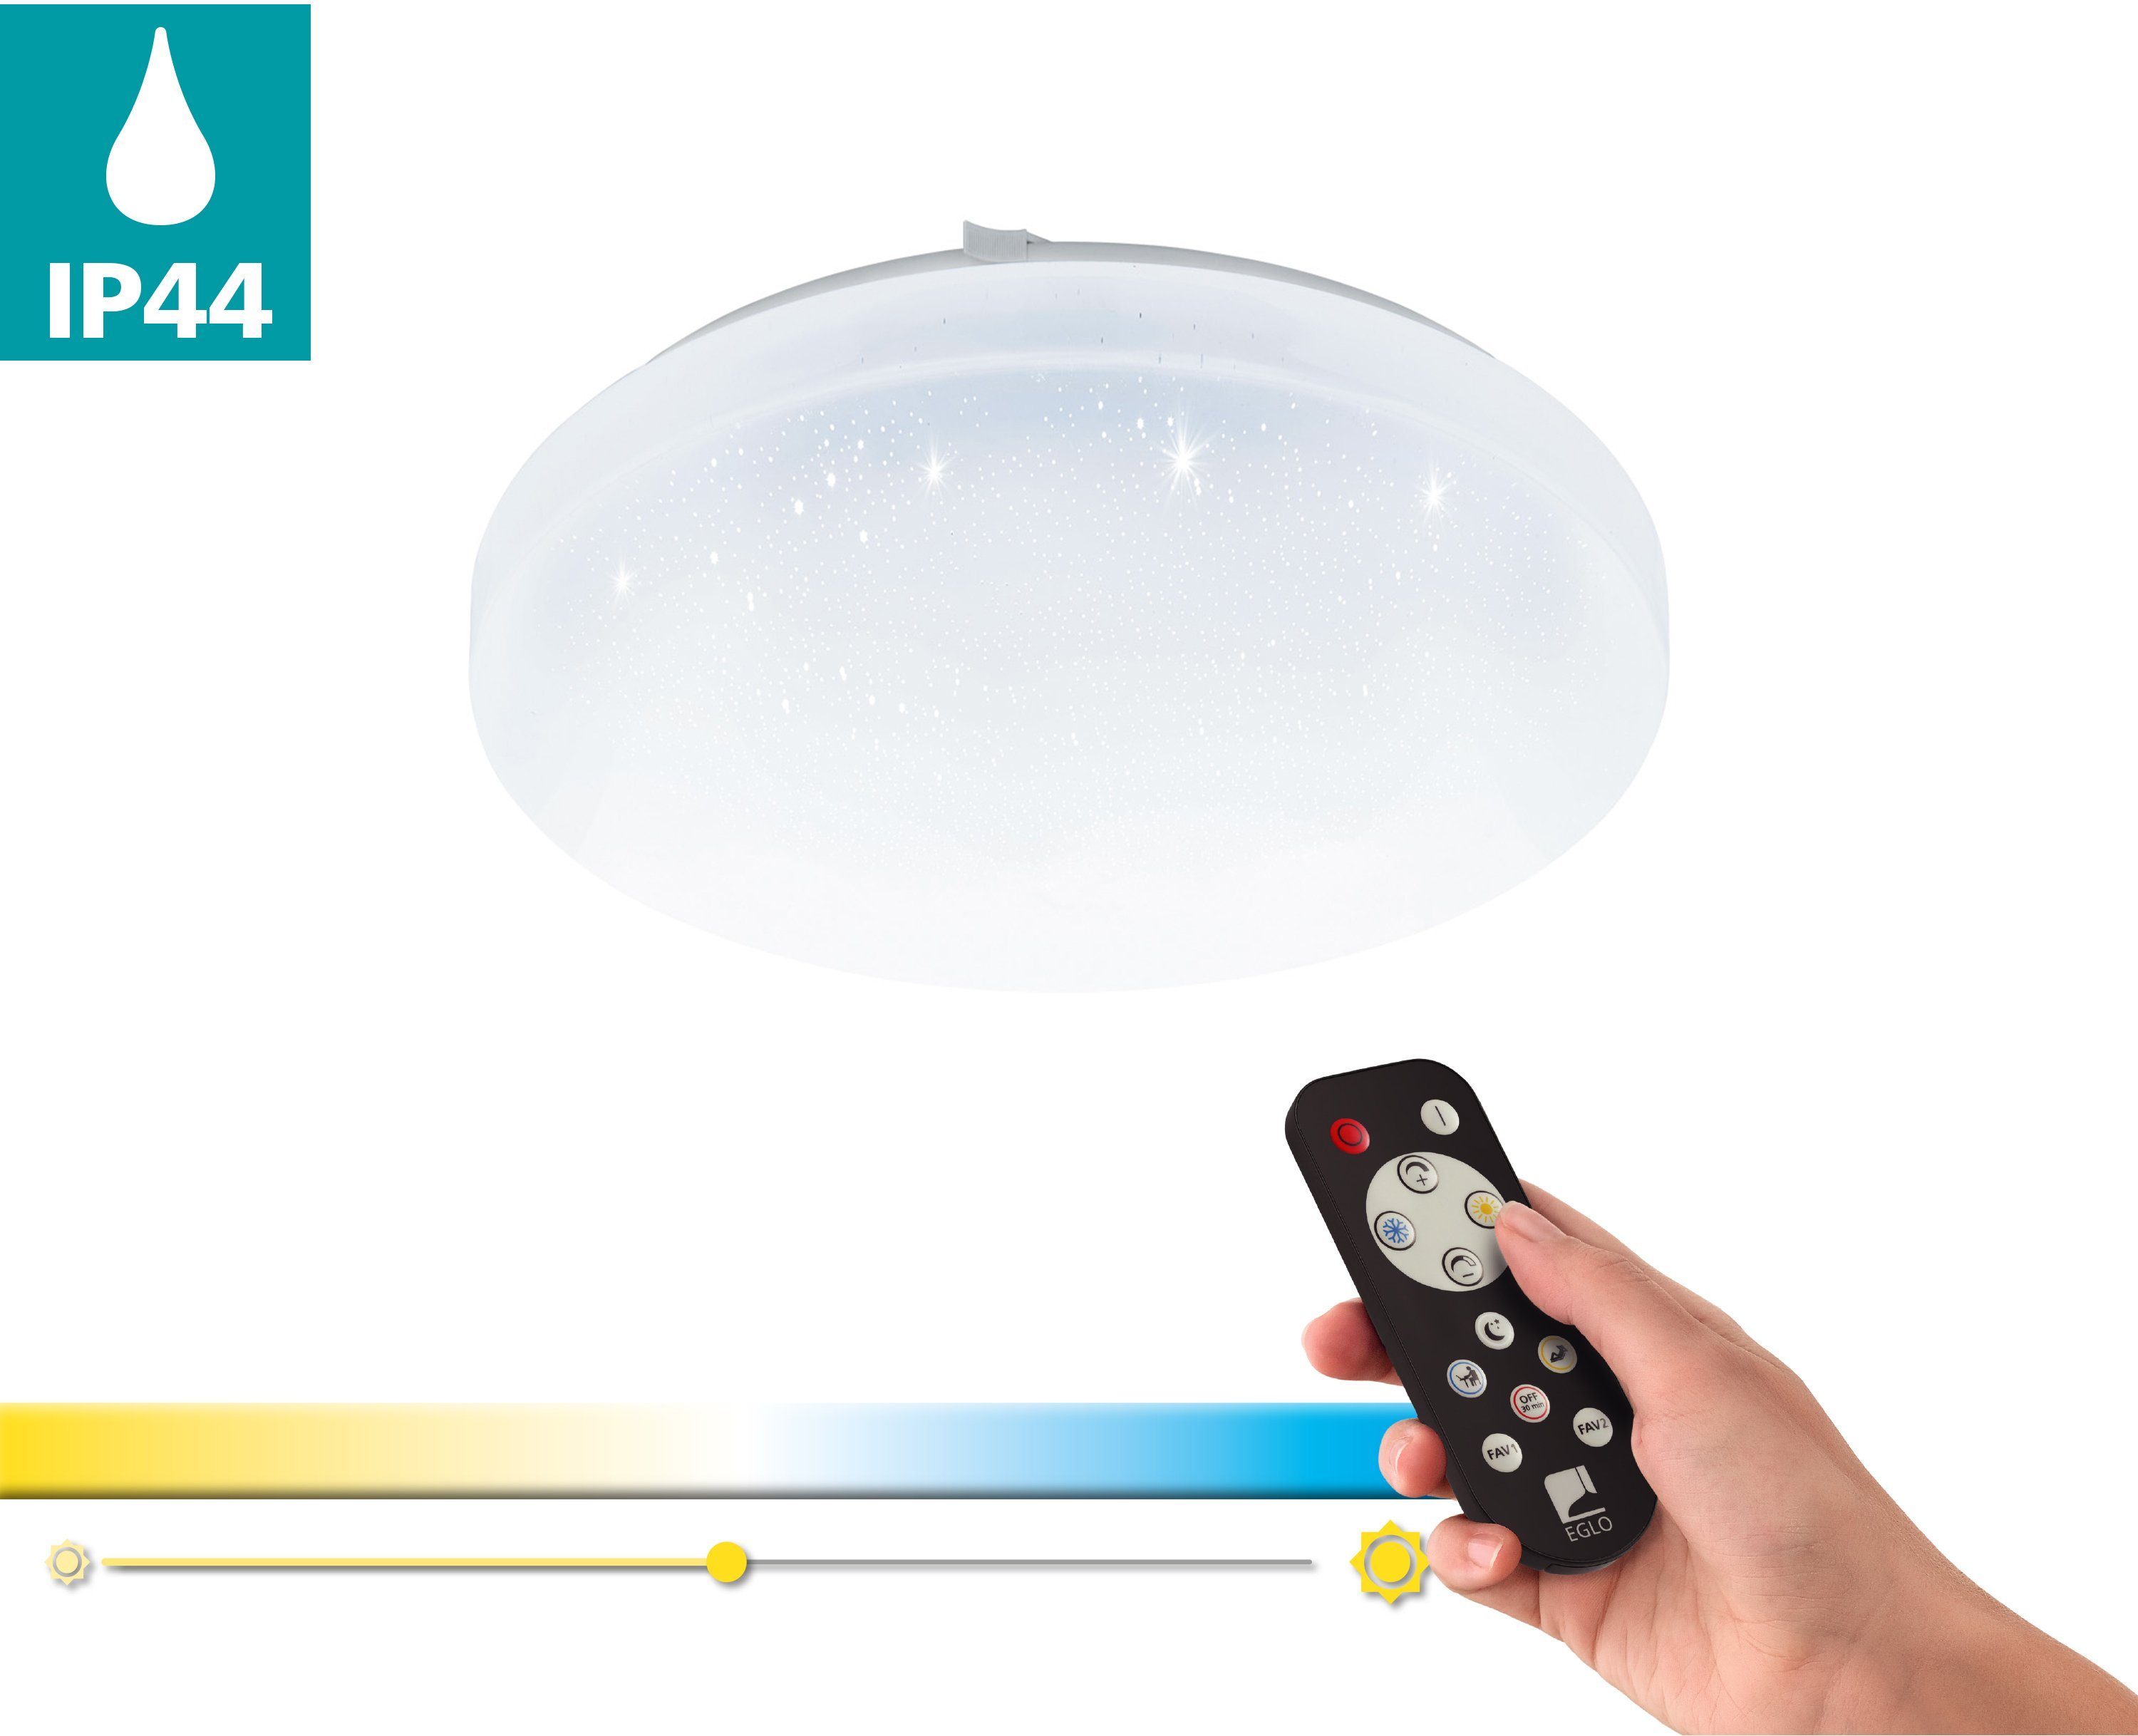 EGLO Plafondlamp FRANIA-A wit / ø 30 x h5,5 cm / inclusief 1x led-plank (elk 19w, 1050lm, 2700-6500k) / cct kleurtemperatuurbediening - dimbaar - nachtlampfunctie - met afstandsbed